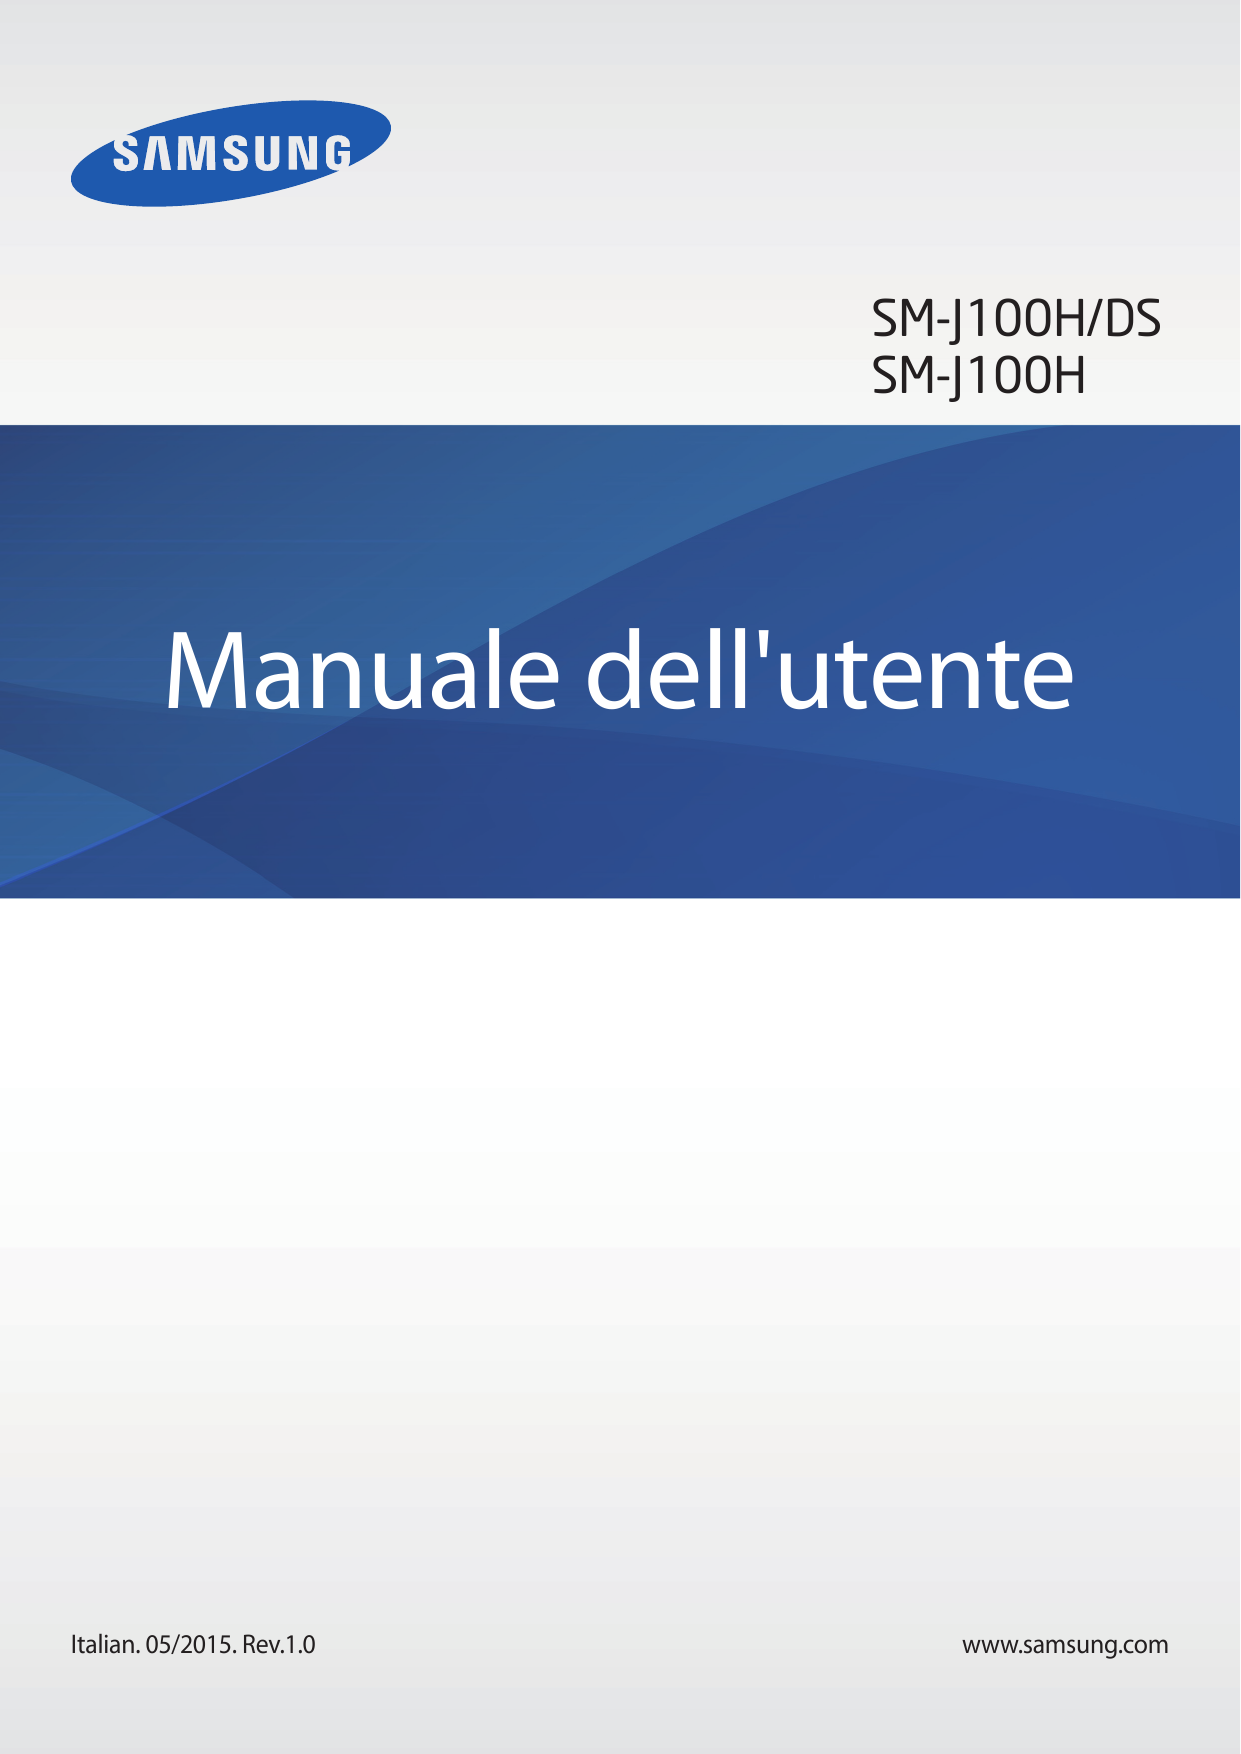 SM-J100H/DSSM-J100HManuale dell'utenteItalian. 05/2015. Rev.1.0www.samsung.com